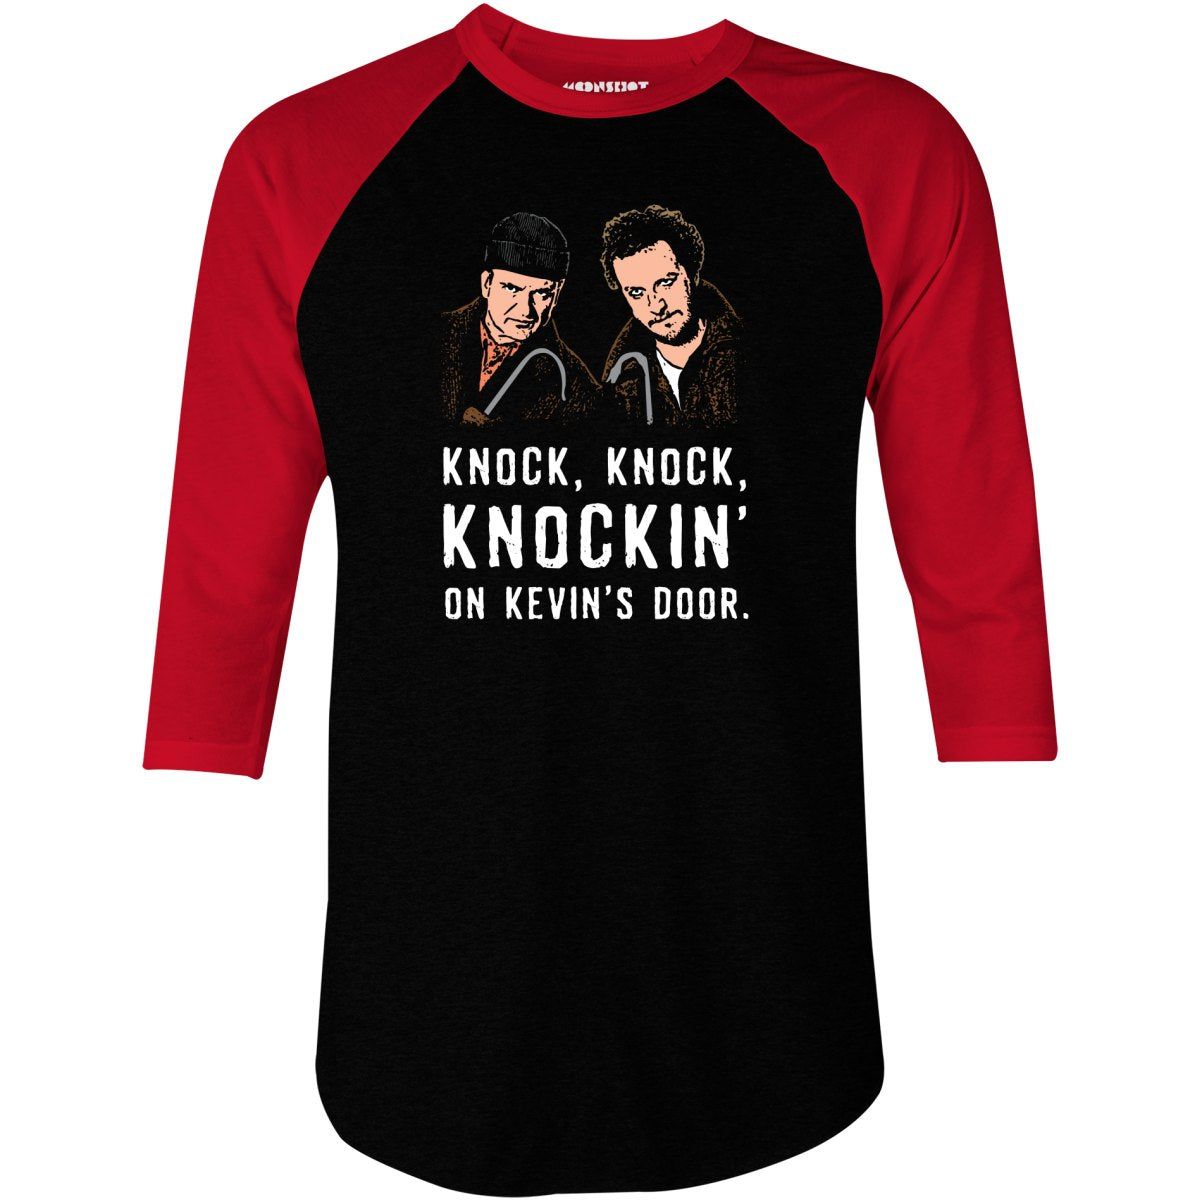 Knock, Knock, Knockin' on Kevin's Door - 3/4 Sleeve Raglan T-Shirt